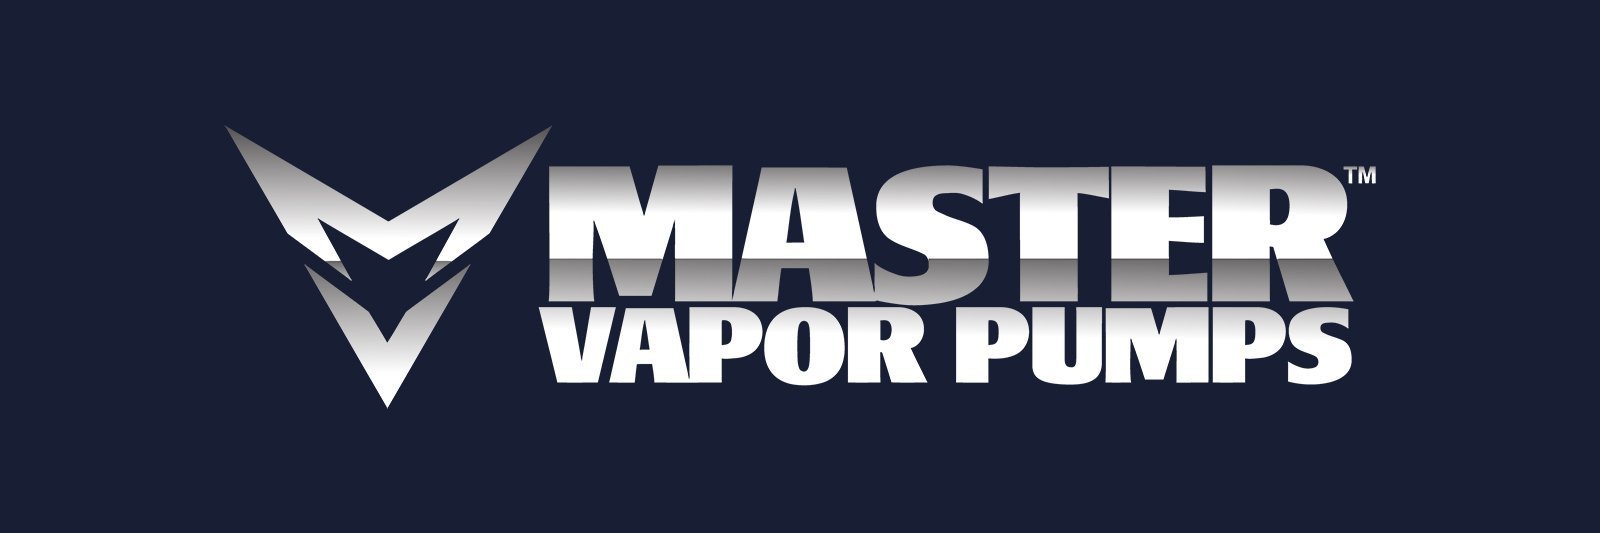 Master Vapor Pumps, Pump Part - MVP - Liquid - Fluid Cover Kit